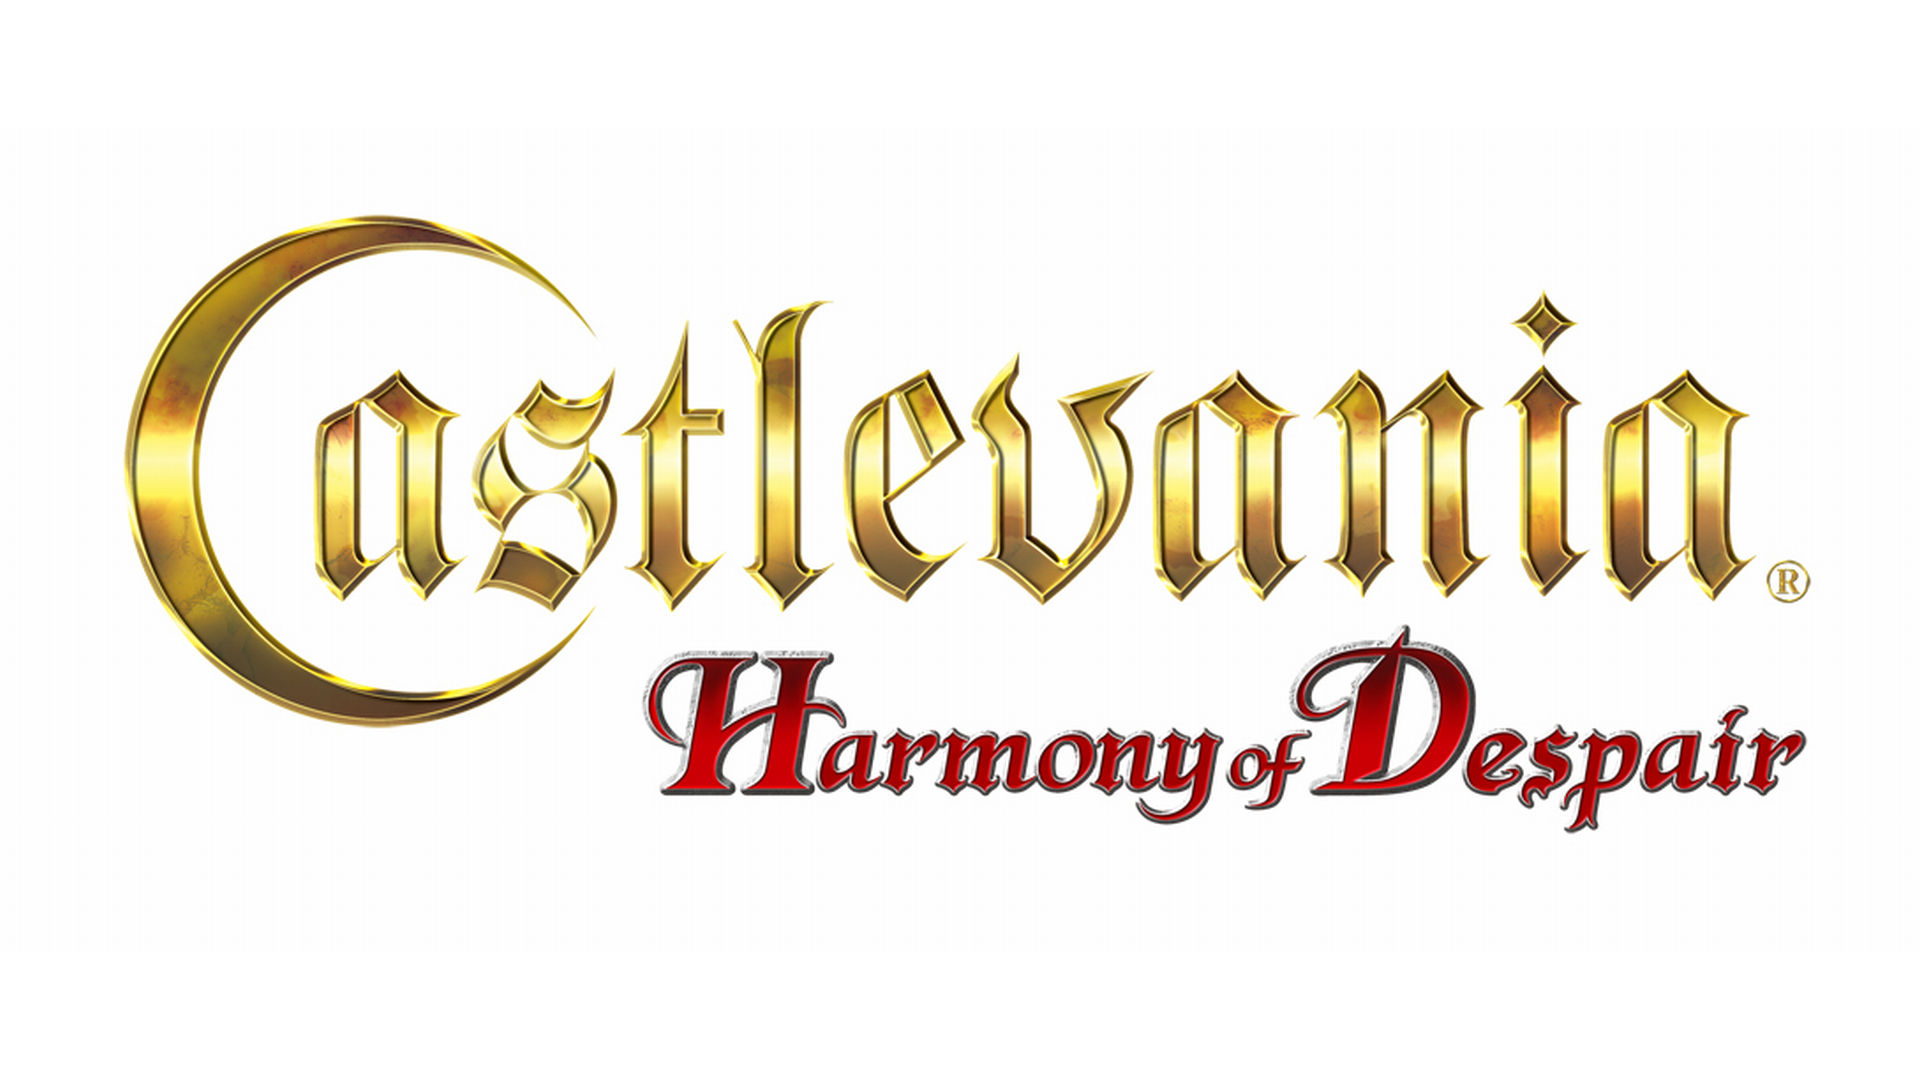 Castlevania: Harmony of Despair Logo